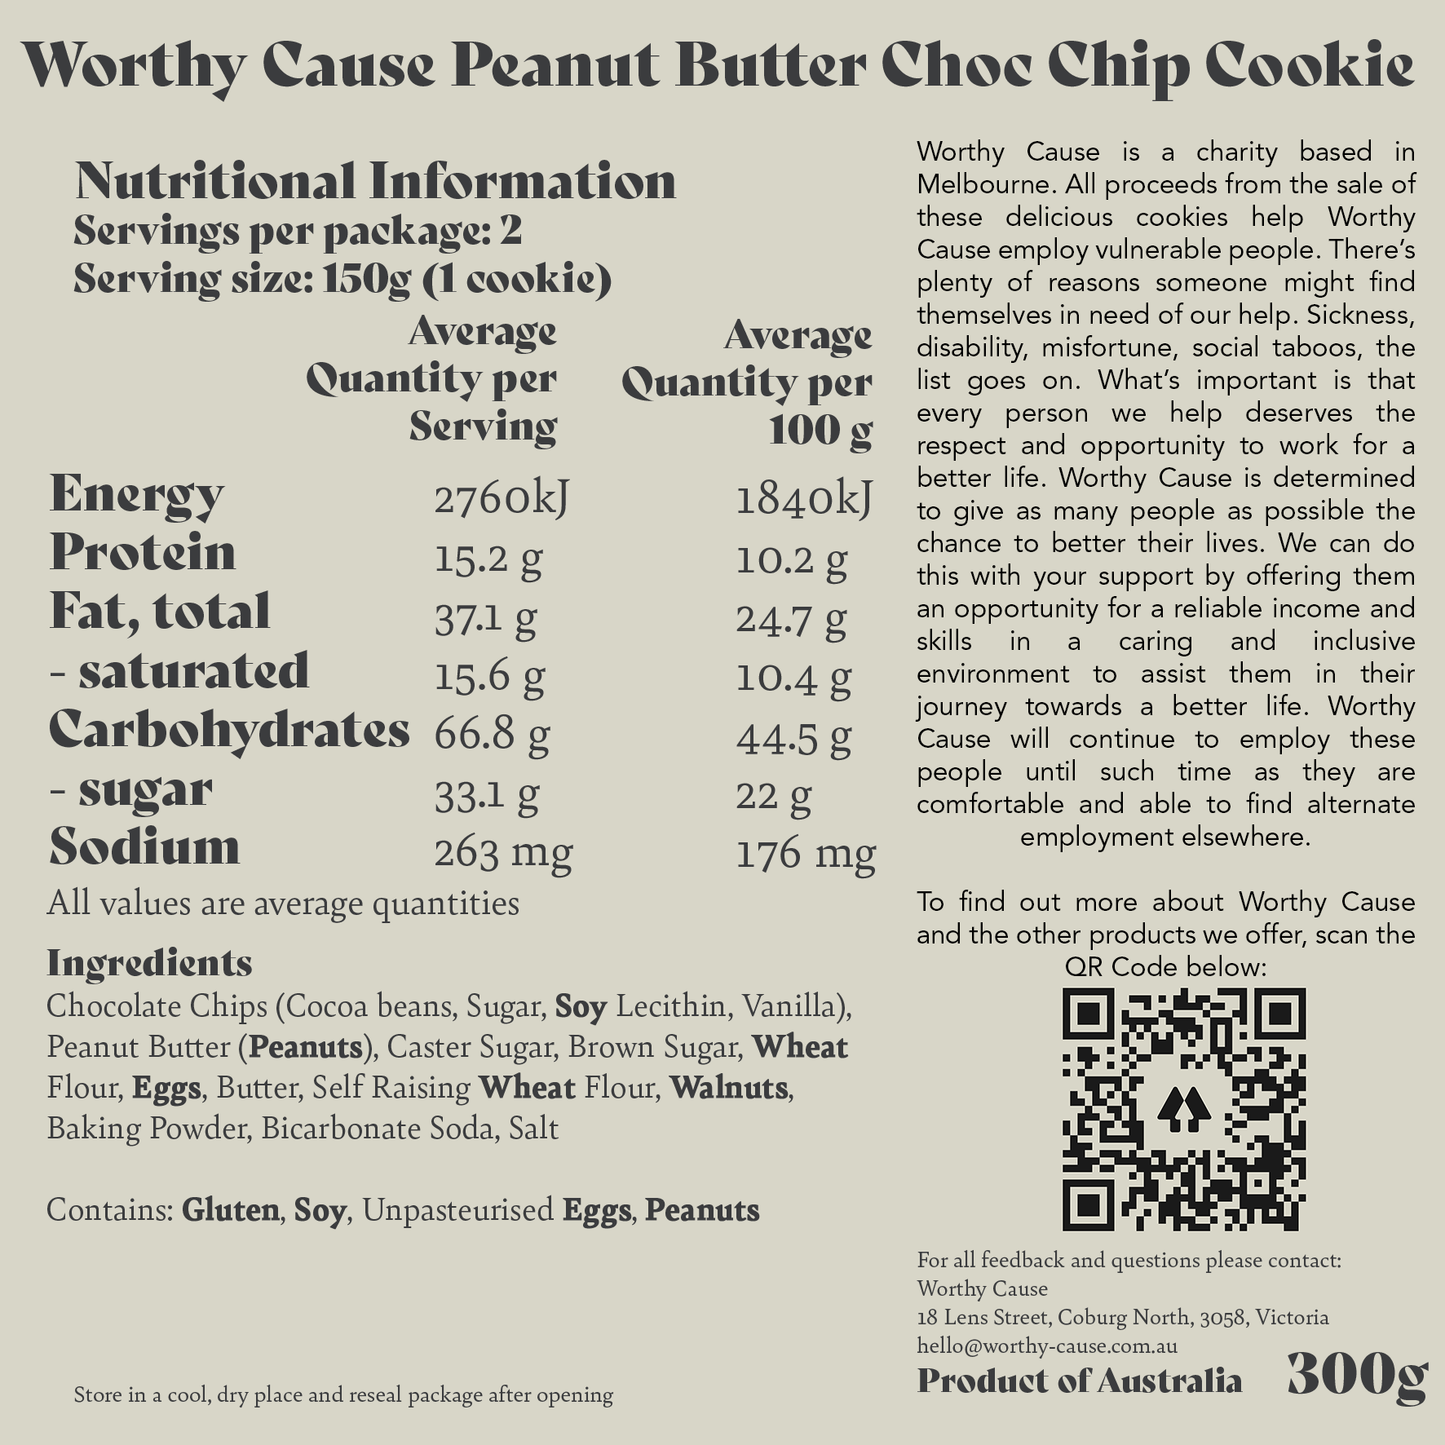 Peanut Butter Choc Chip Cookies